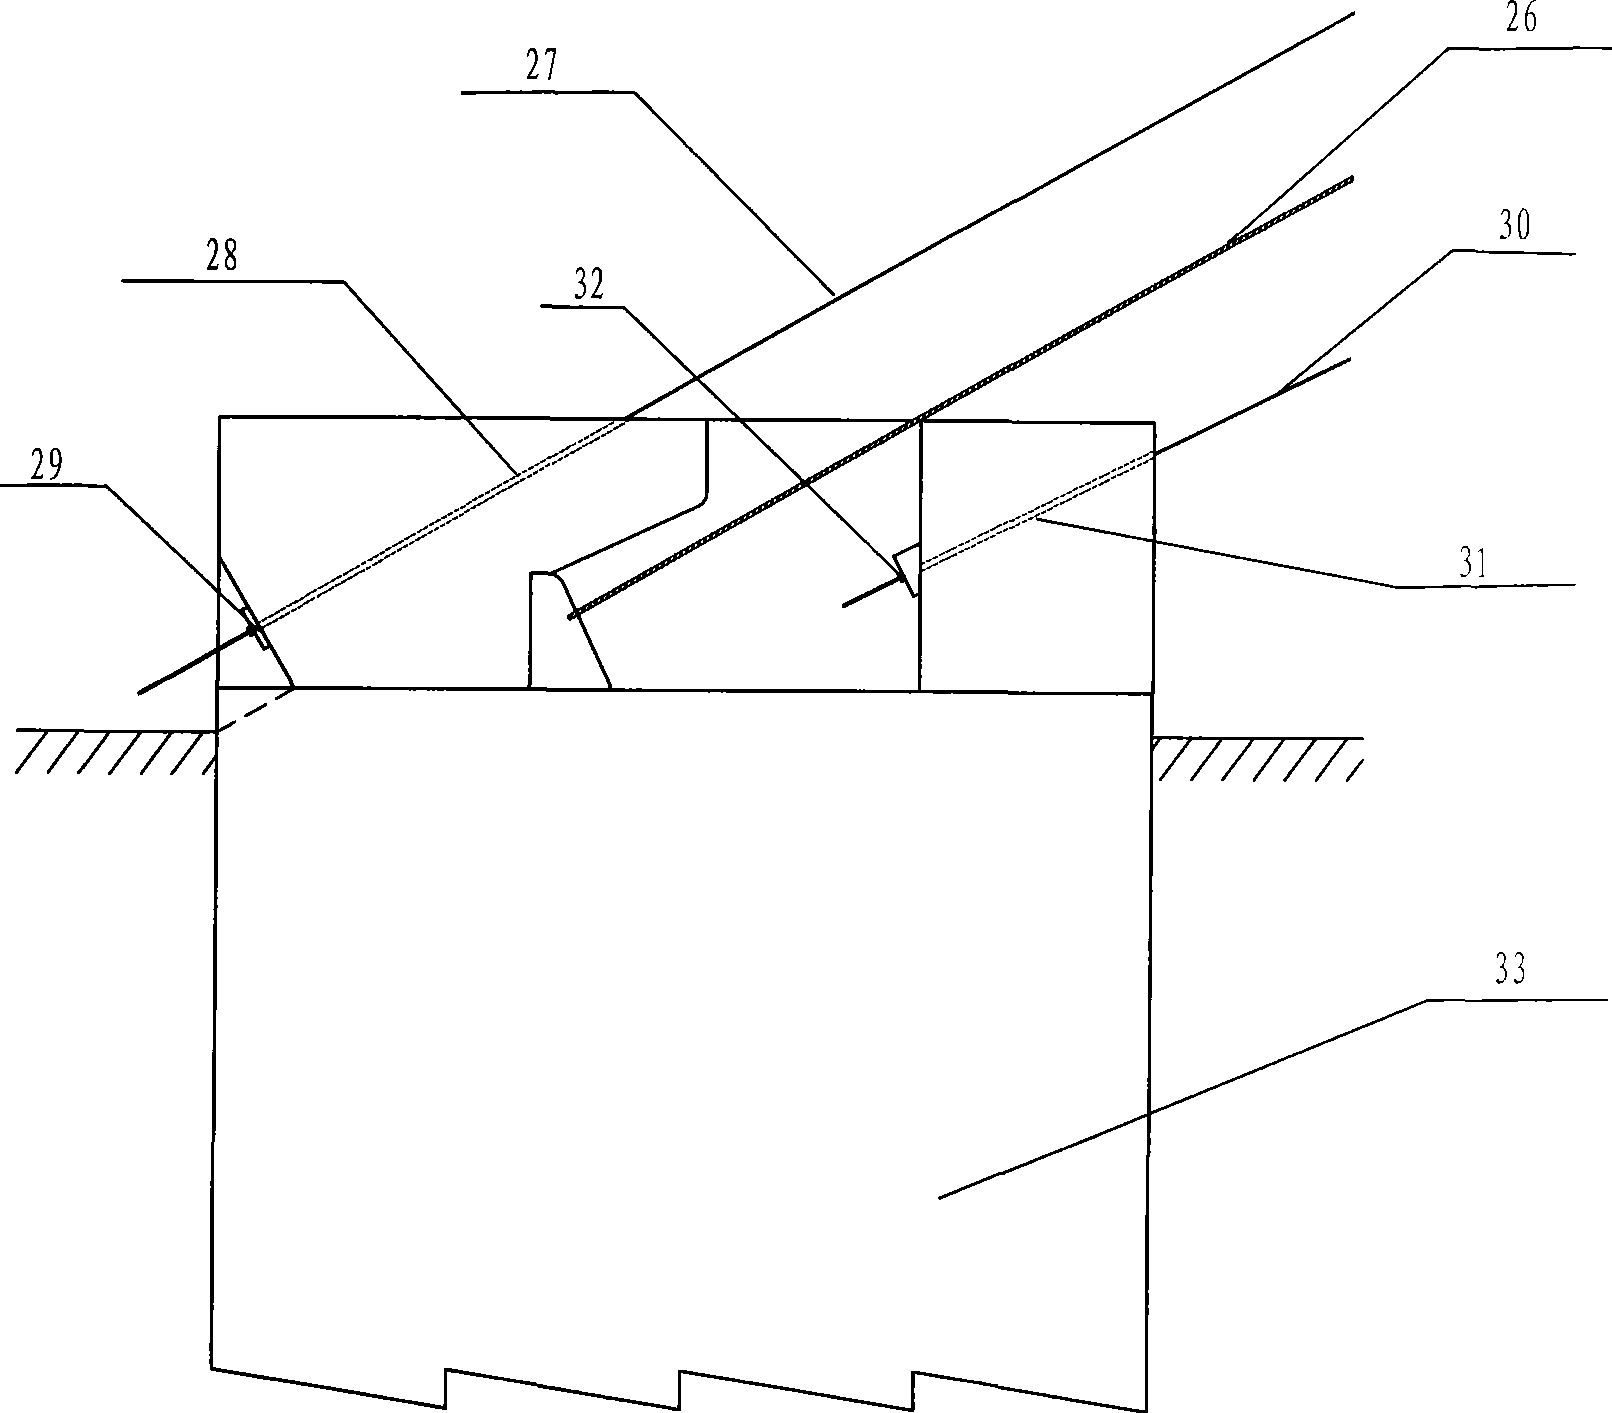 Non-stand construction method for large bridge arch rib